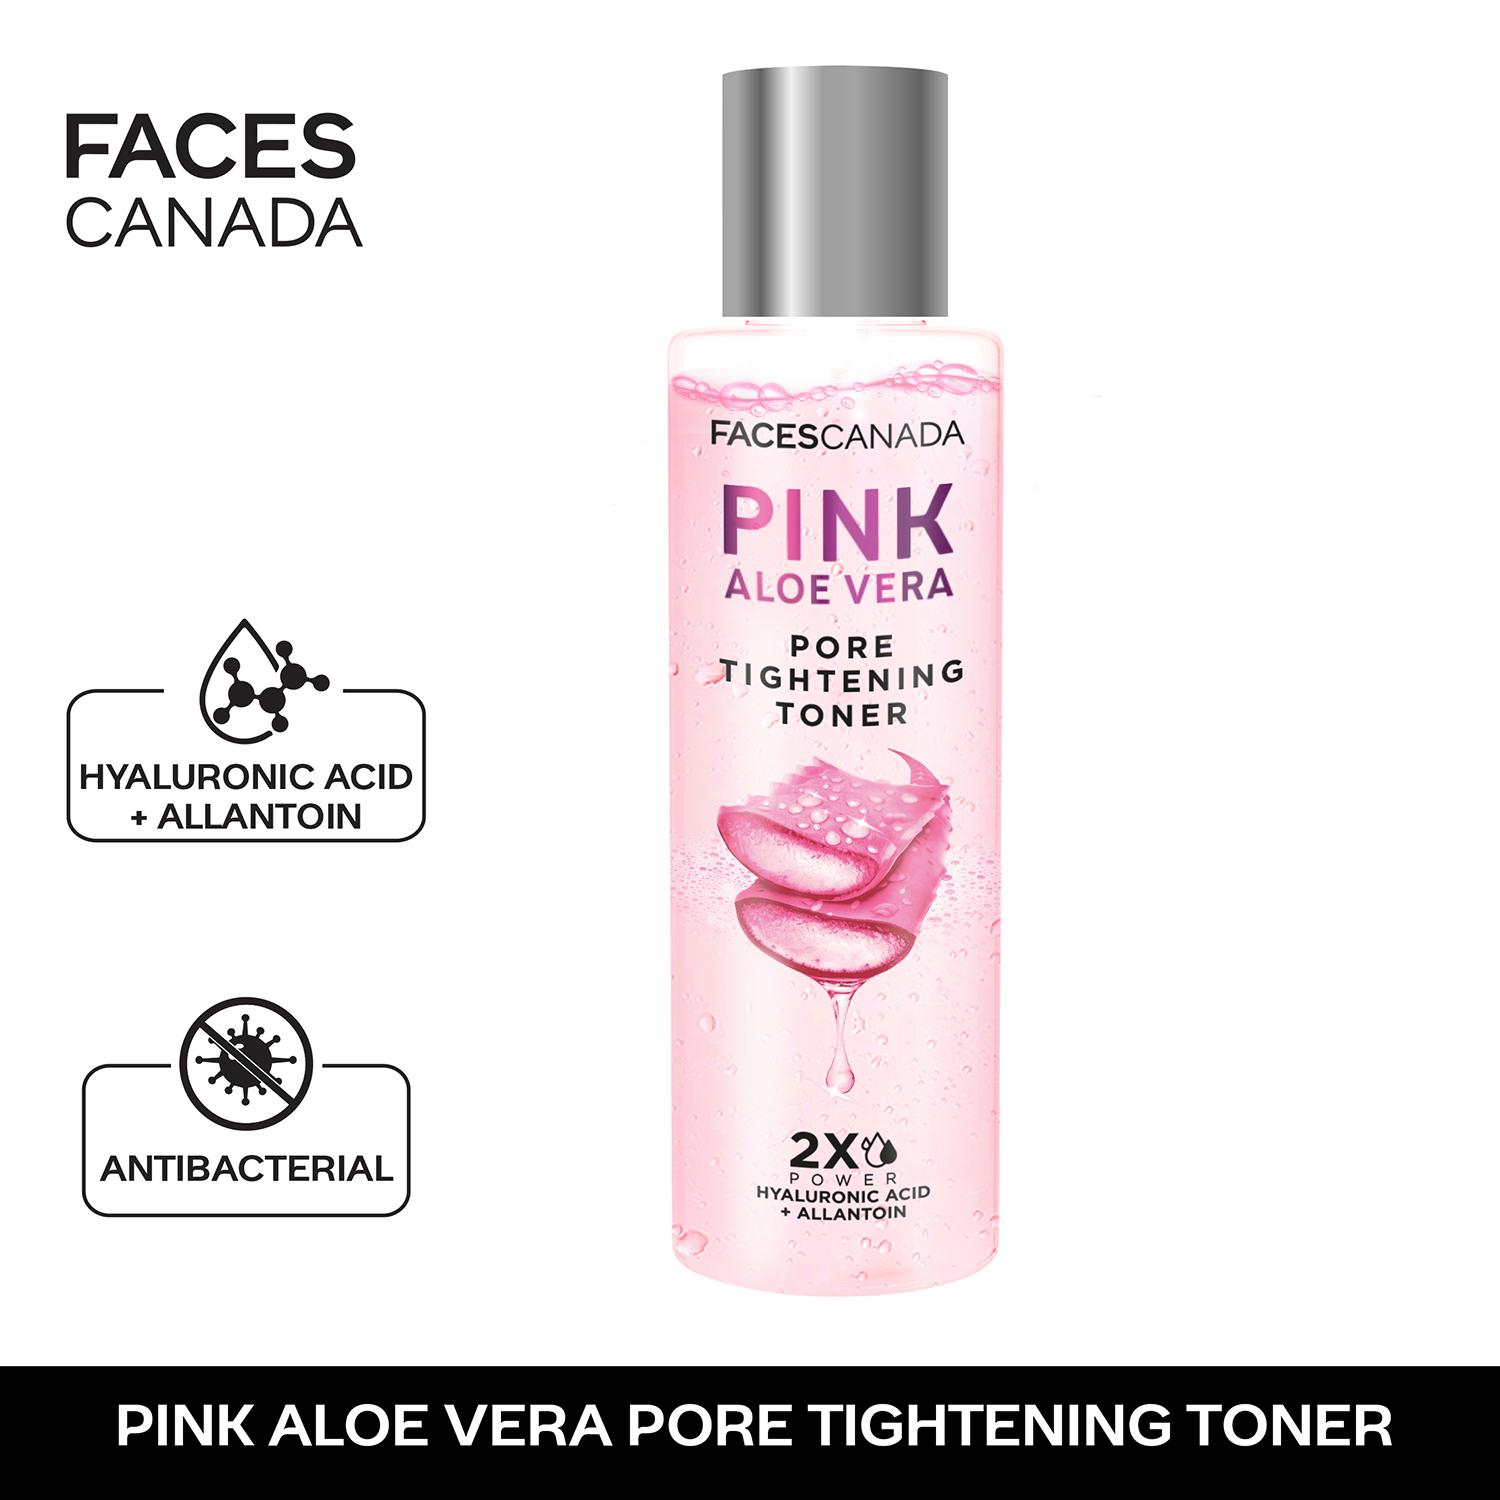 Faces Canada | Faces Canada Pink Aloe Vera Pore Tightening Toner (100ml)